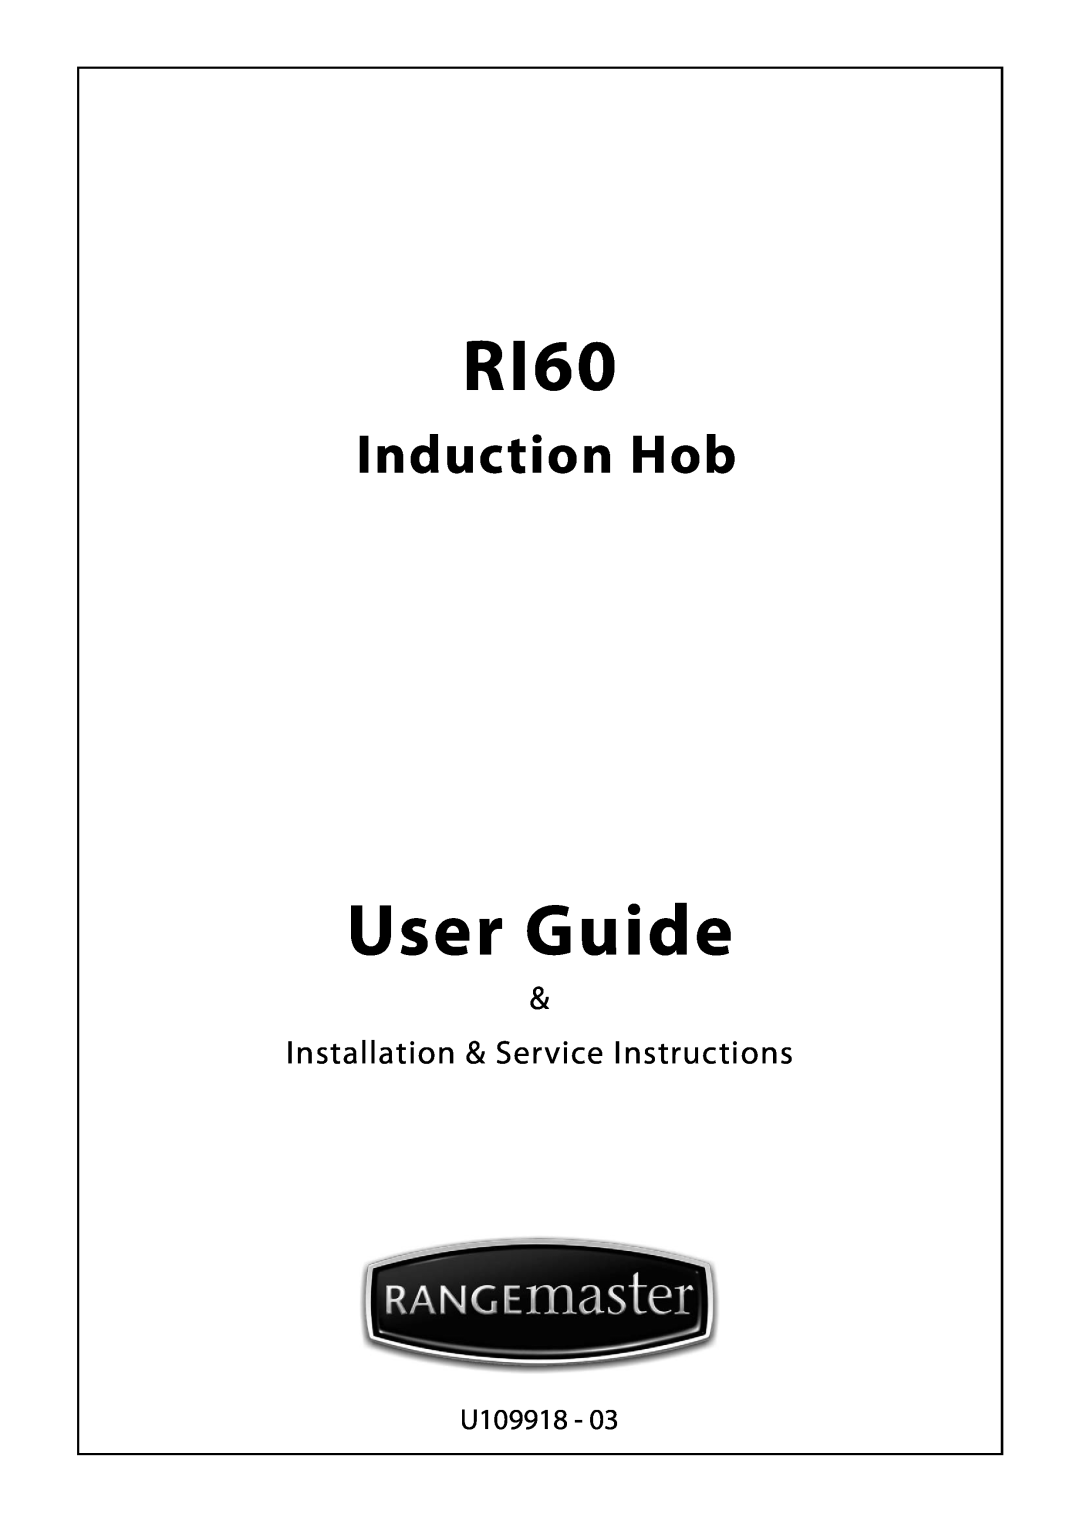 Rangemaster RI60 manual User Guide, Induction Hob, Installation & Service Instructions, U109918 